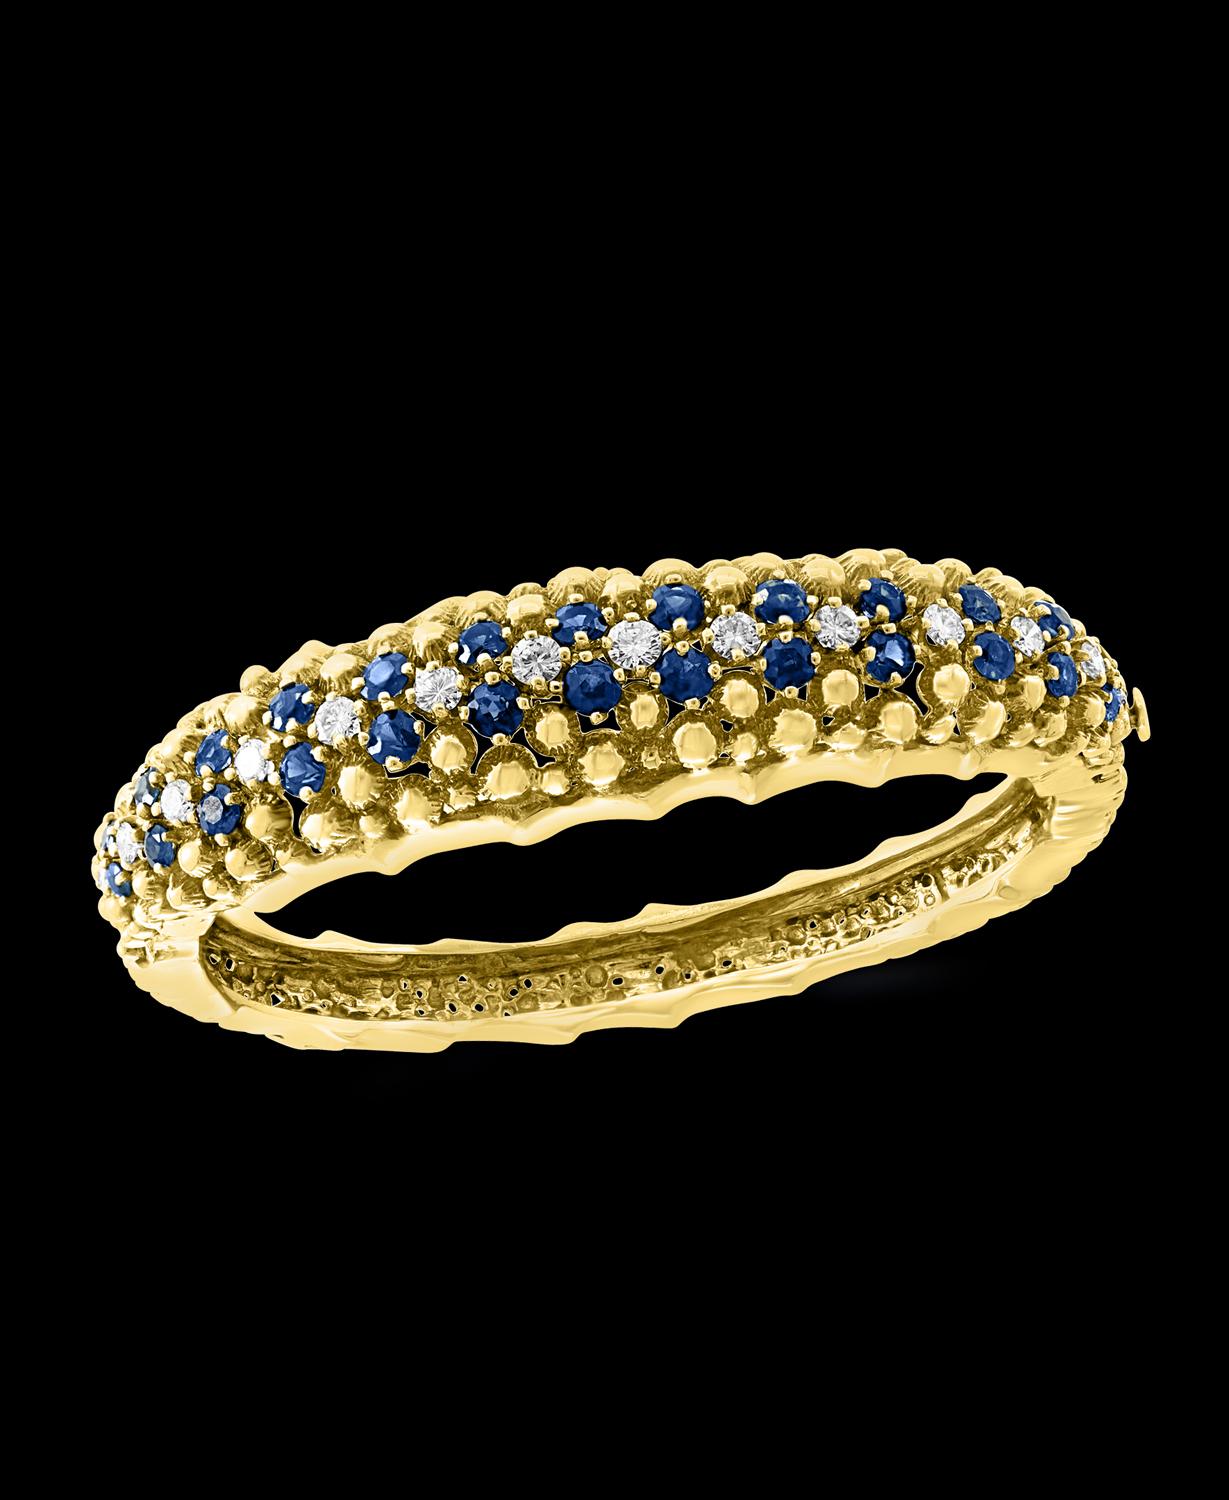 Round Cut 5 Carat Sapphire and 1.5 Carat Diamond Cuff Bangle Bracelet in 18 Karat Gold For Sale